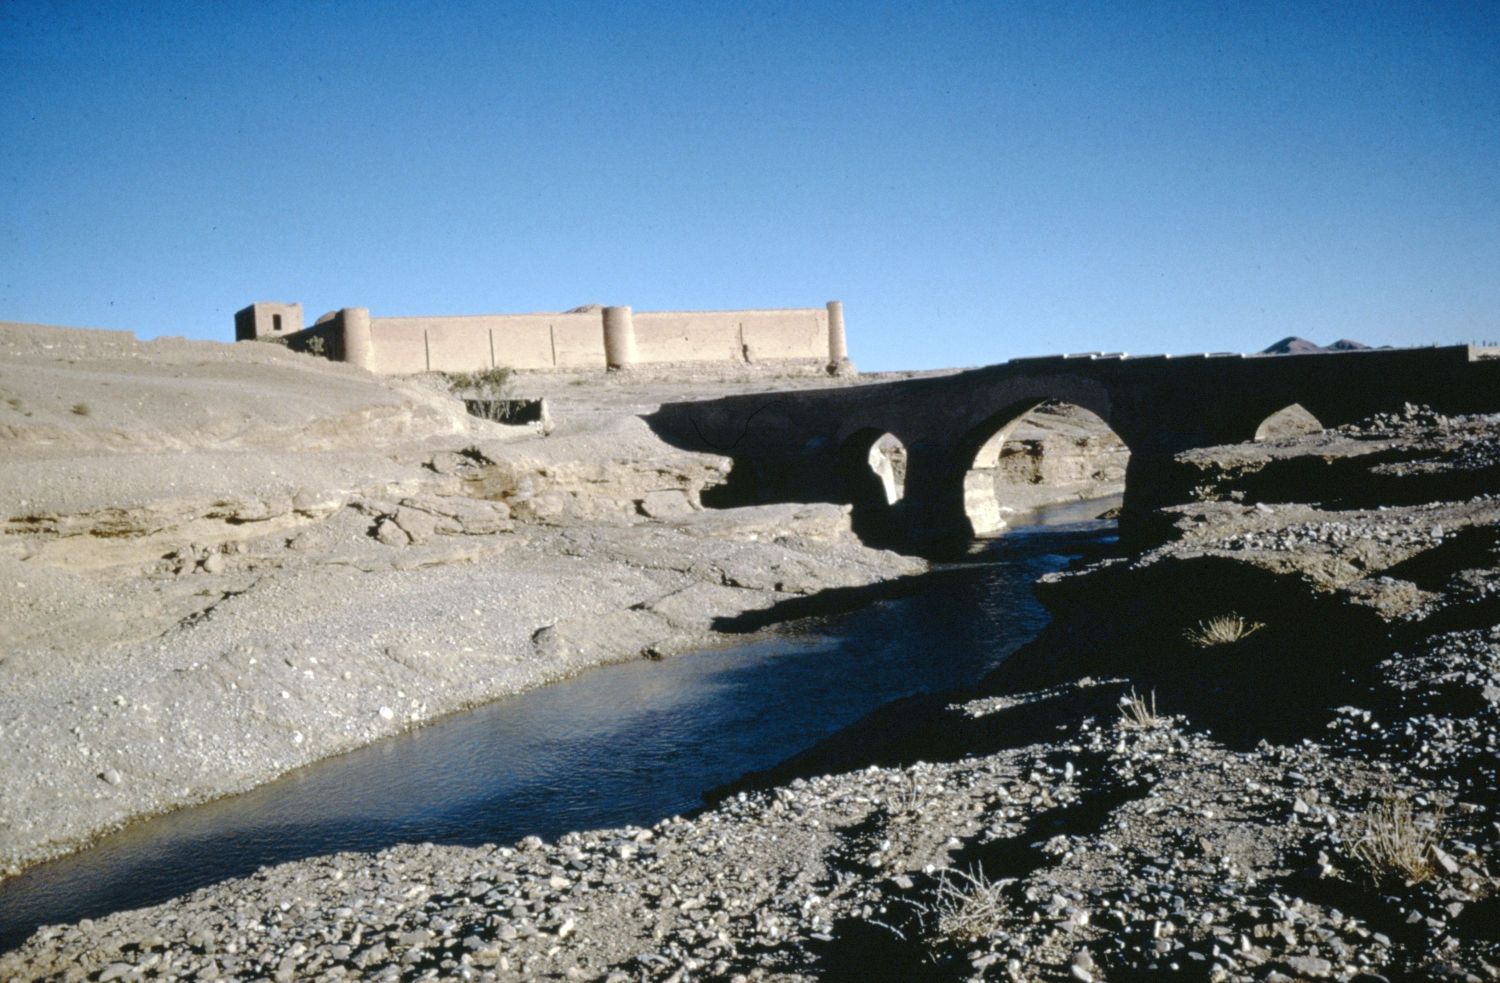 View of bridge over stream and walls of caravanserai in background.